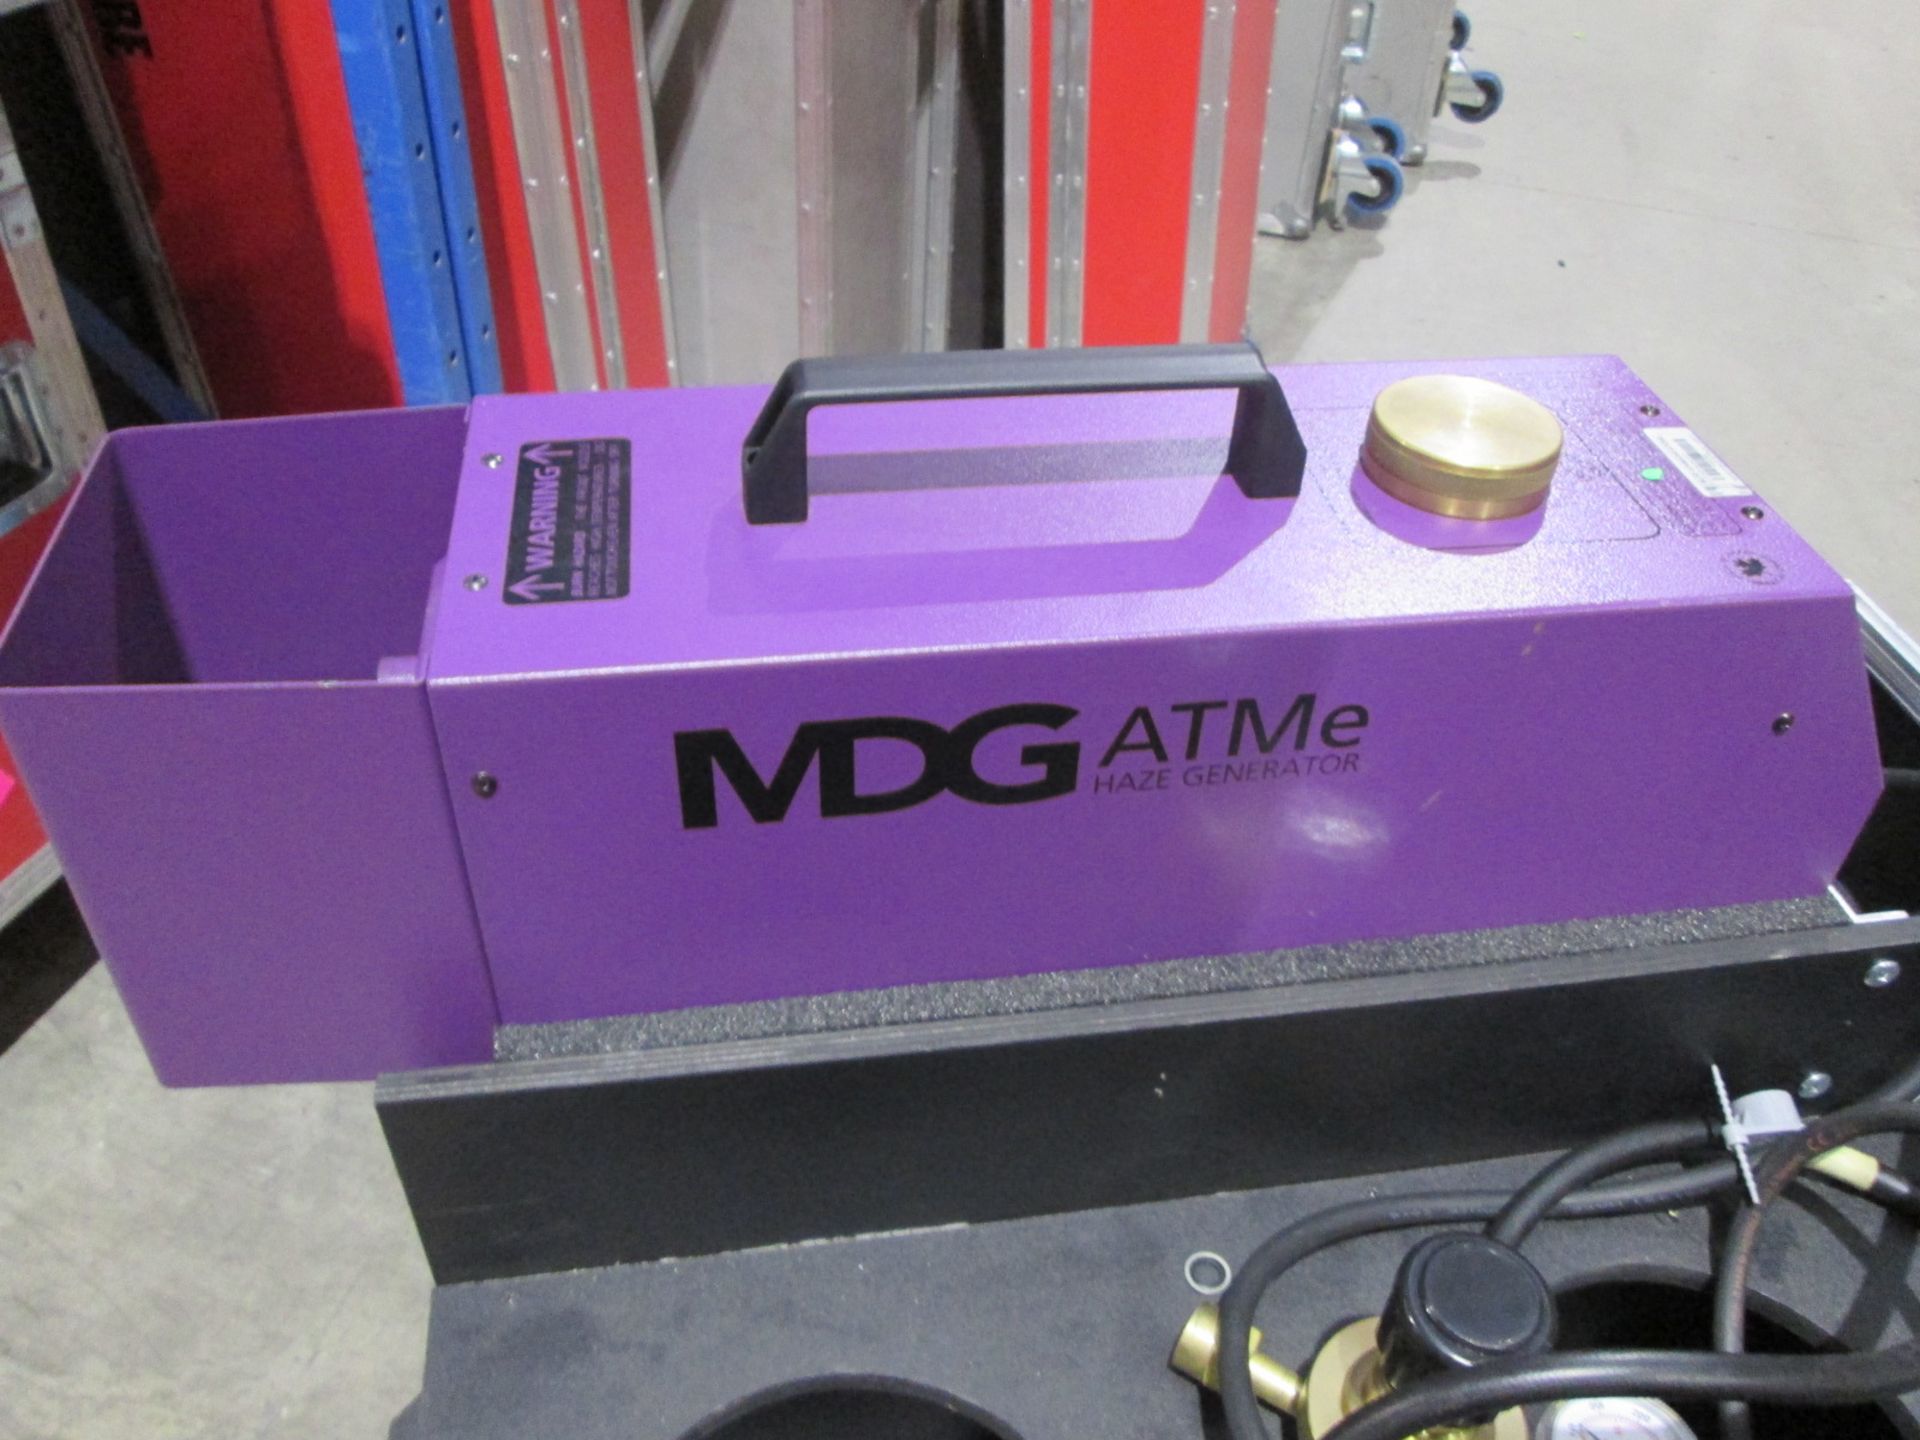 MDG ATMe APS Haze Generator. In flight case. S/N ATMe18980 - Image 2 of 8